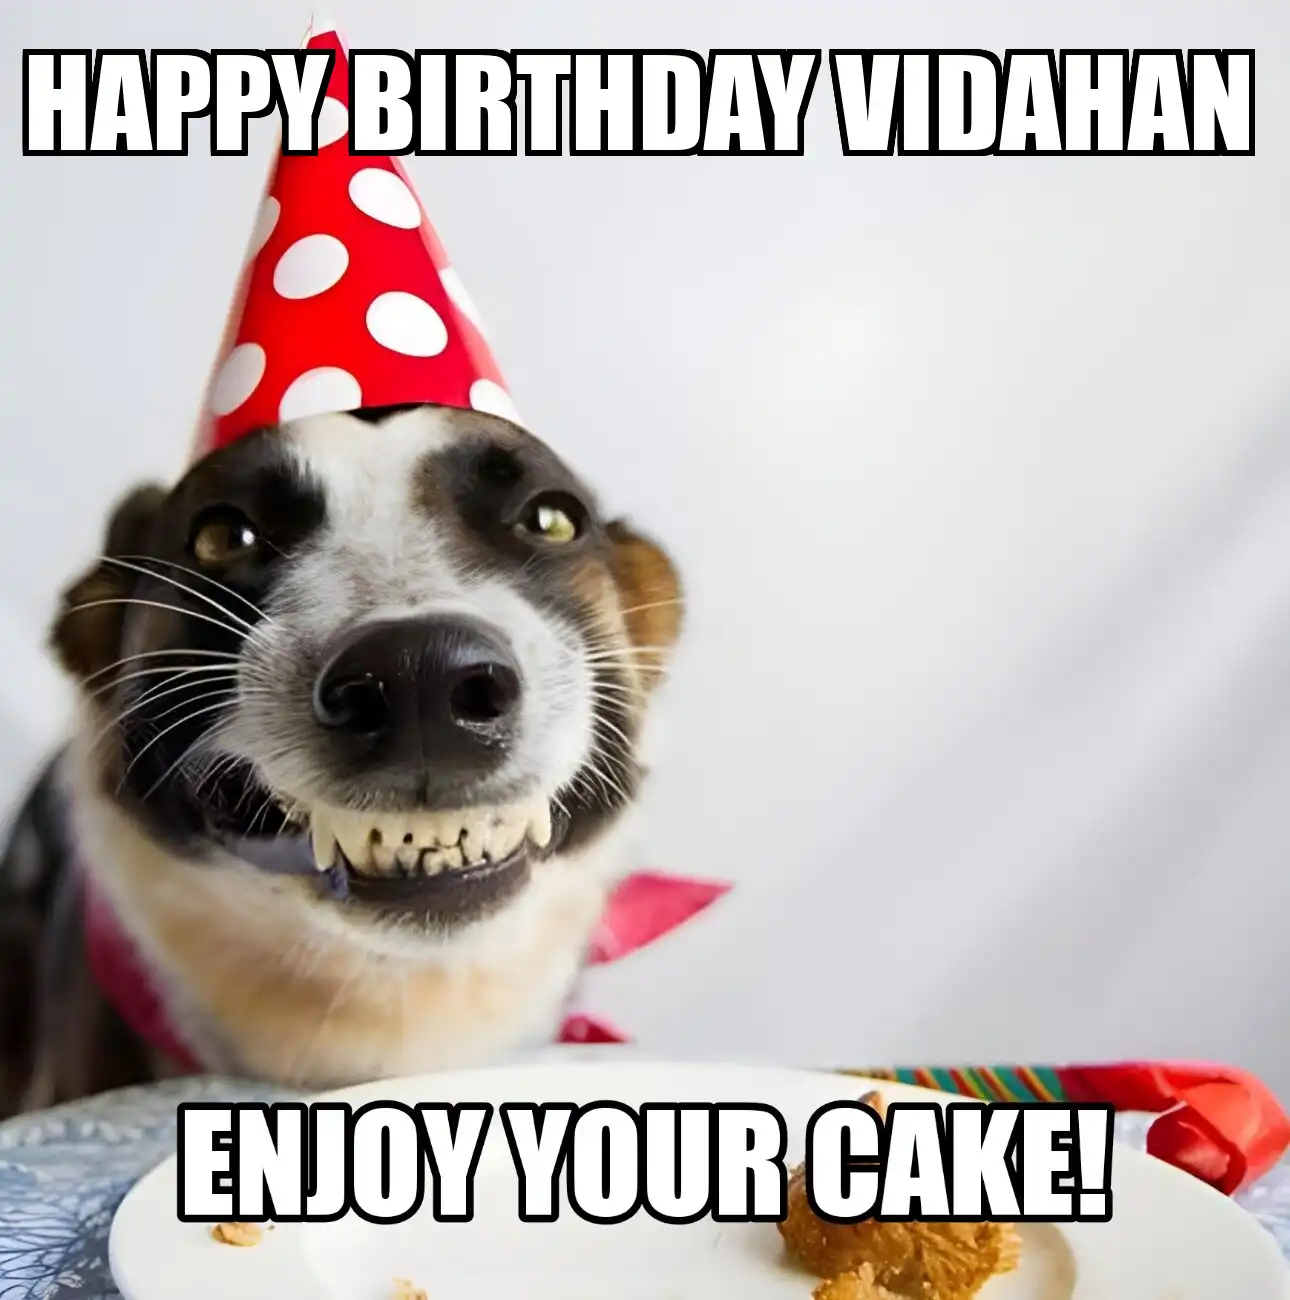 Happy Birthday Vidahan Enjoy Your Cake Dog Meme